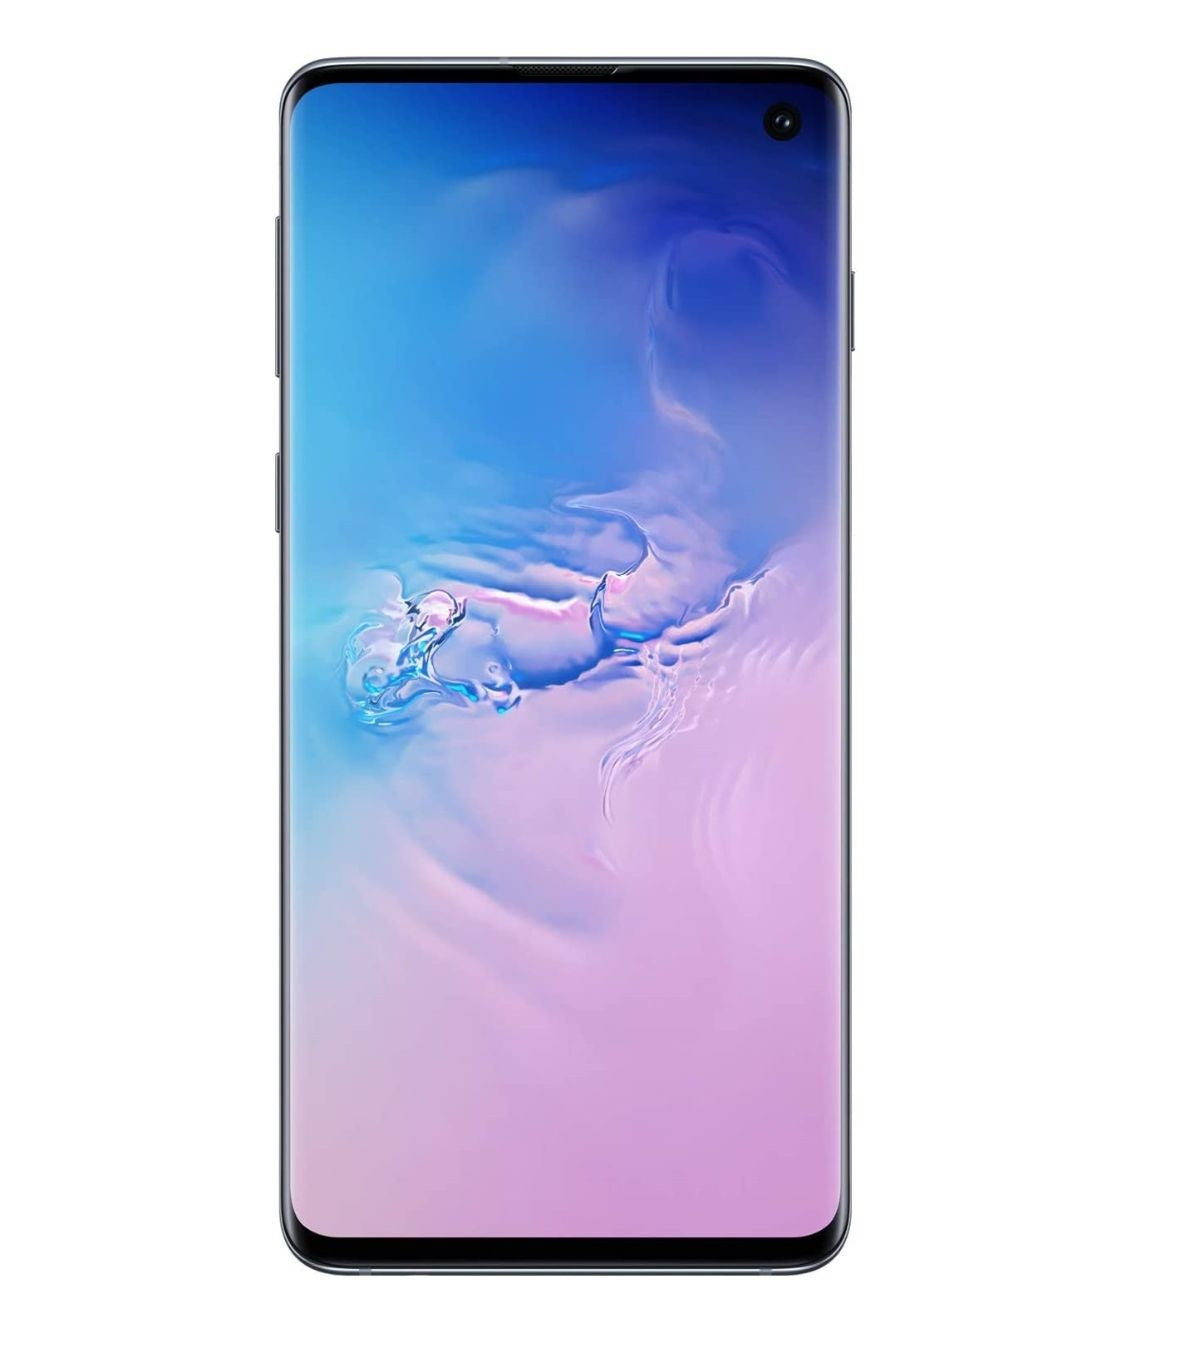 Samsung Galaxy S10 Smartphone (SM-G973U) Verizon ONLY - 128GB / Prism Blue Cell Phones & Smartphones Samsung    - Simple Cell Bulk Wholesale Pricing - USA Seller